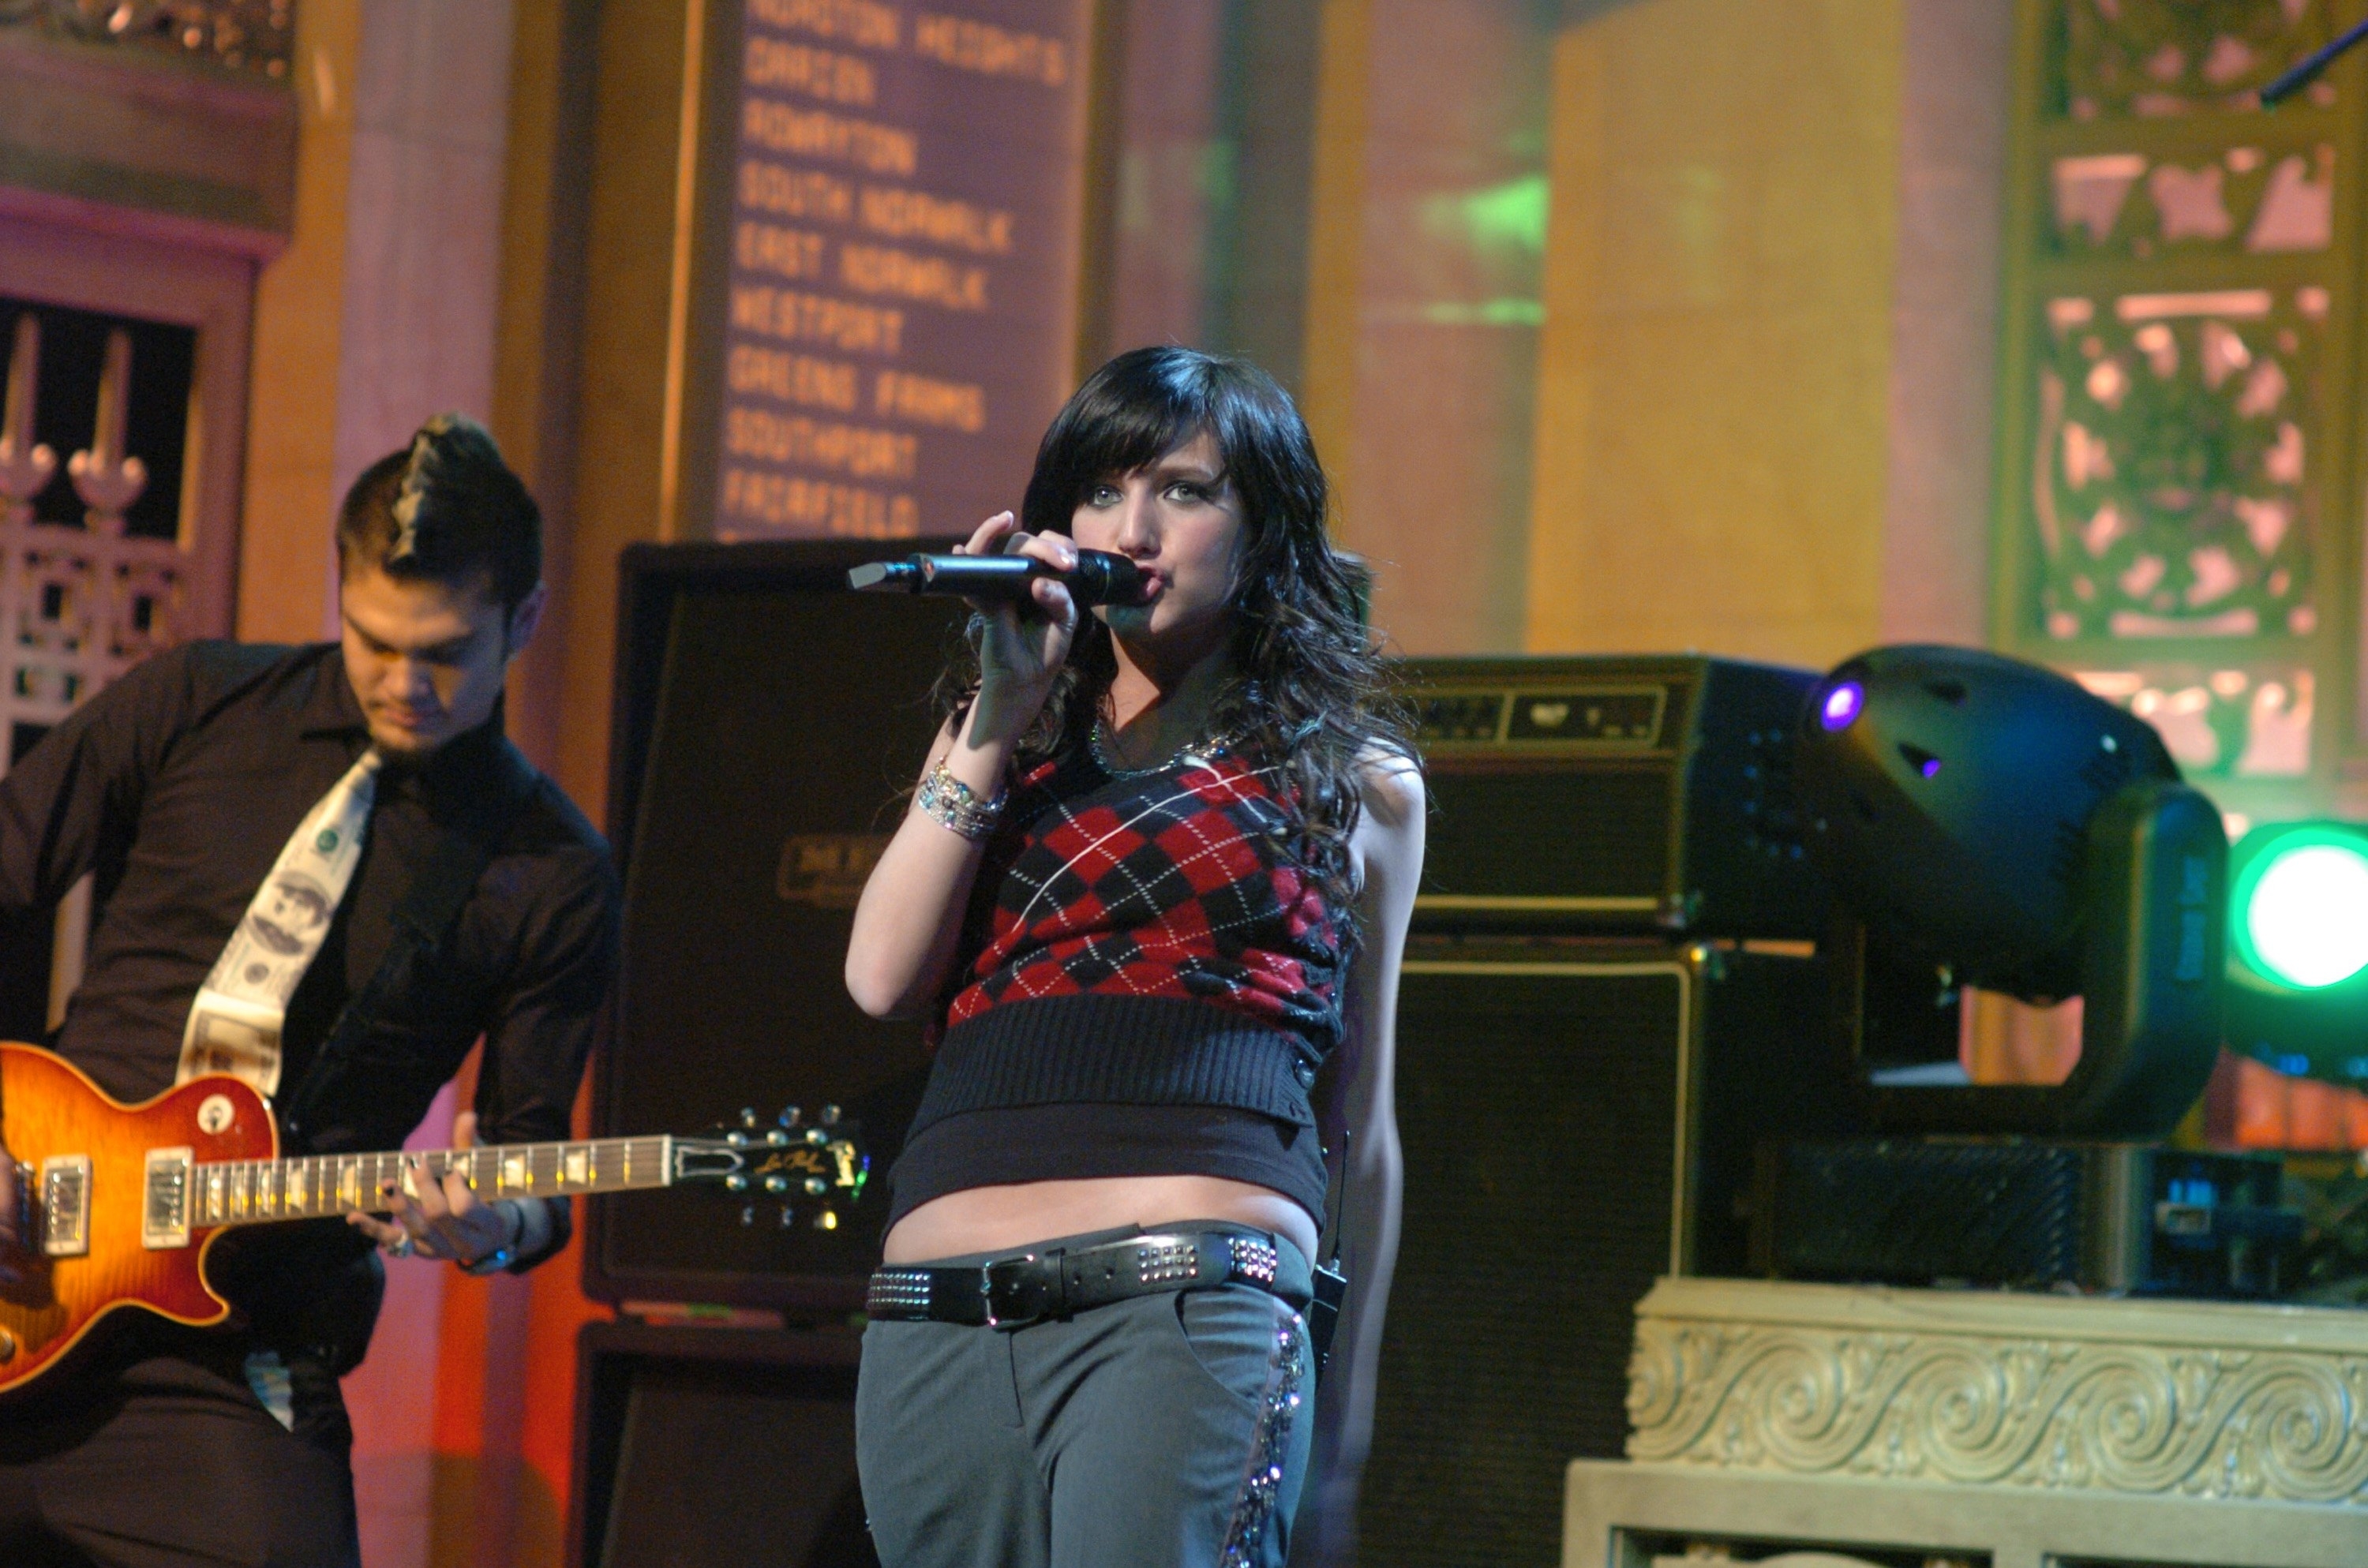 ashlee performing on stage